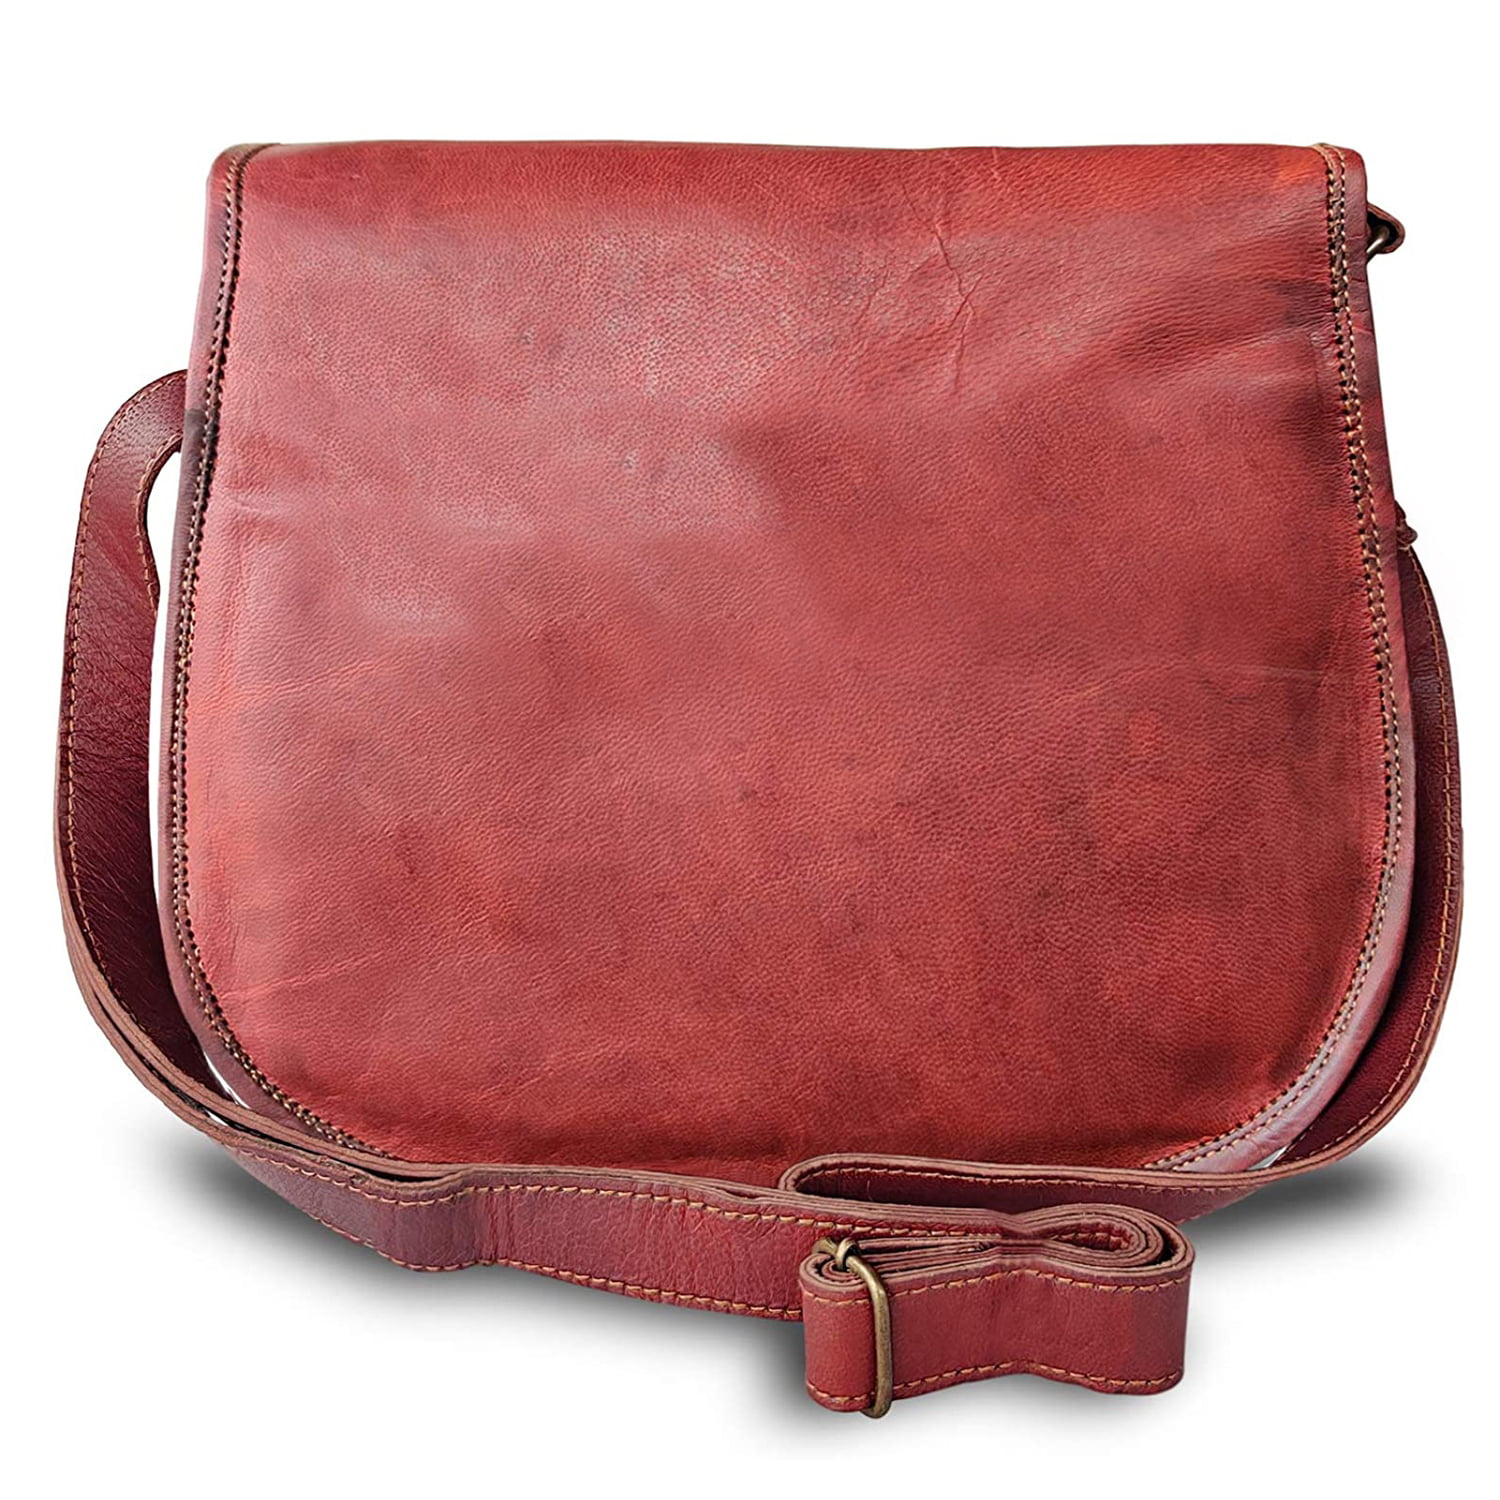 Vintage Bag Leather Messenger Women Purse Tote Handbag Satchel Cross body Bag